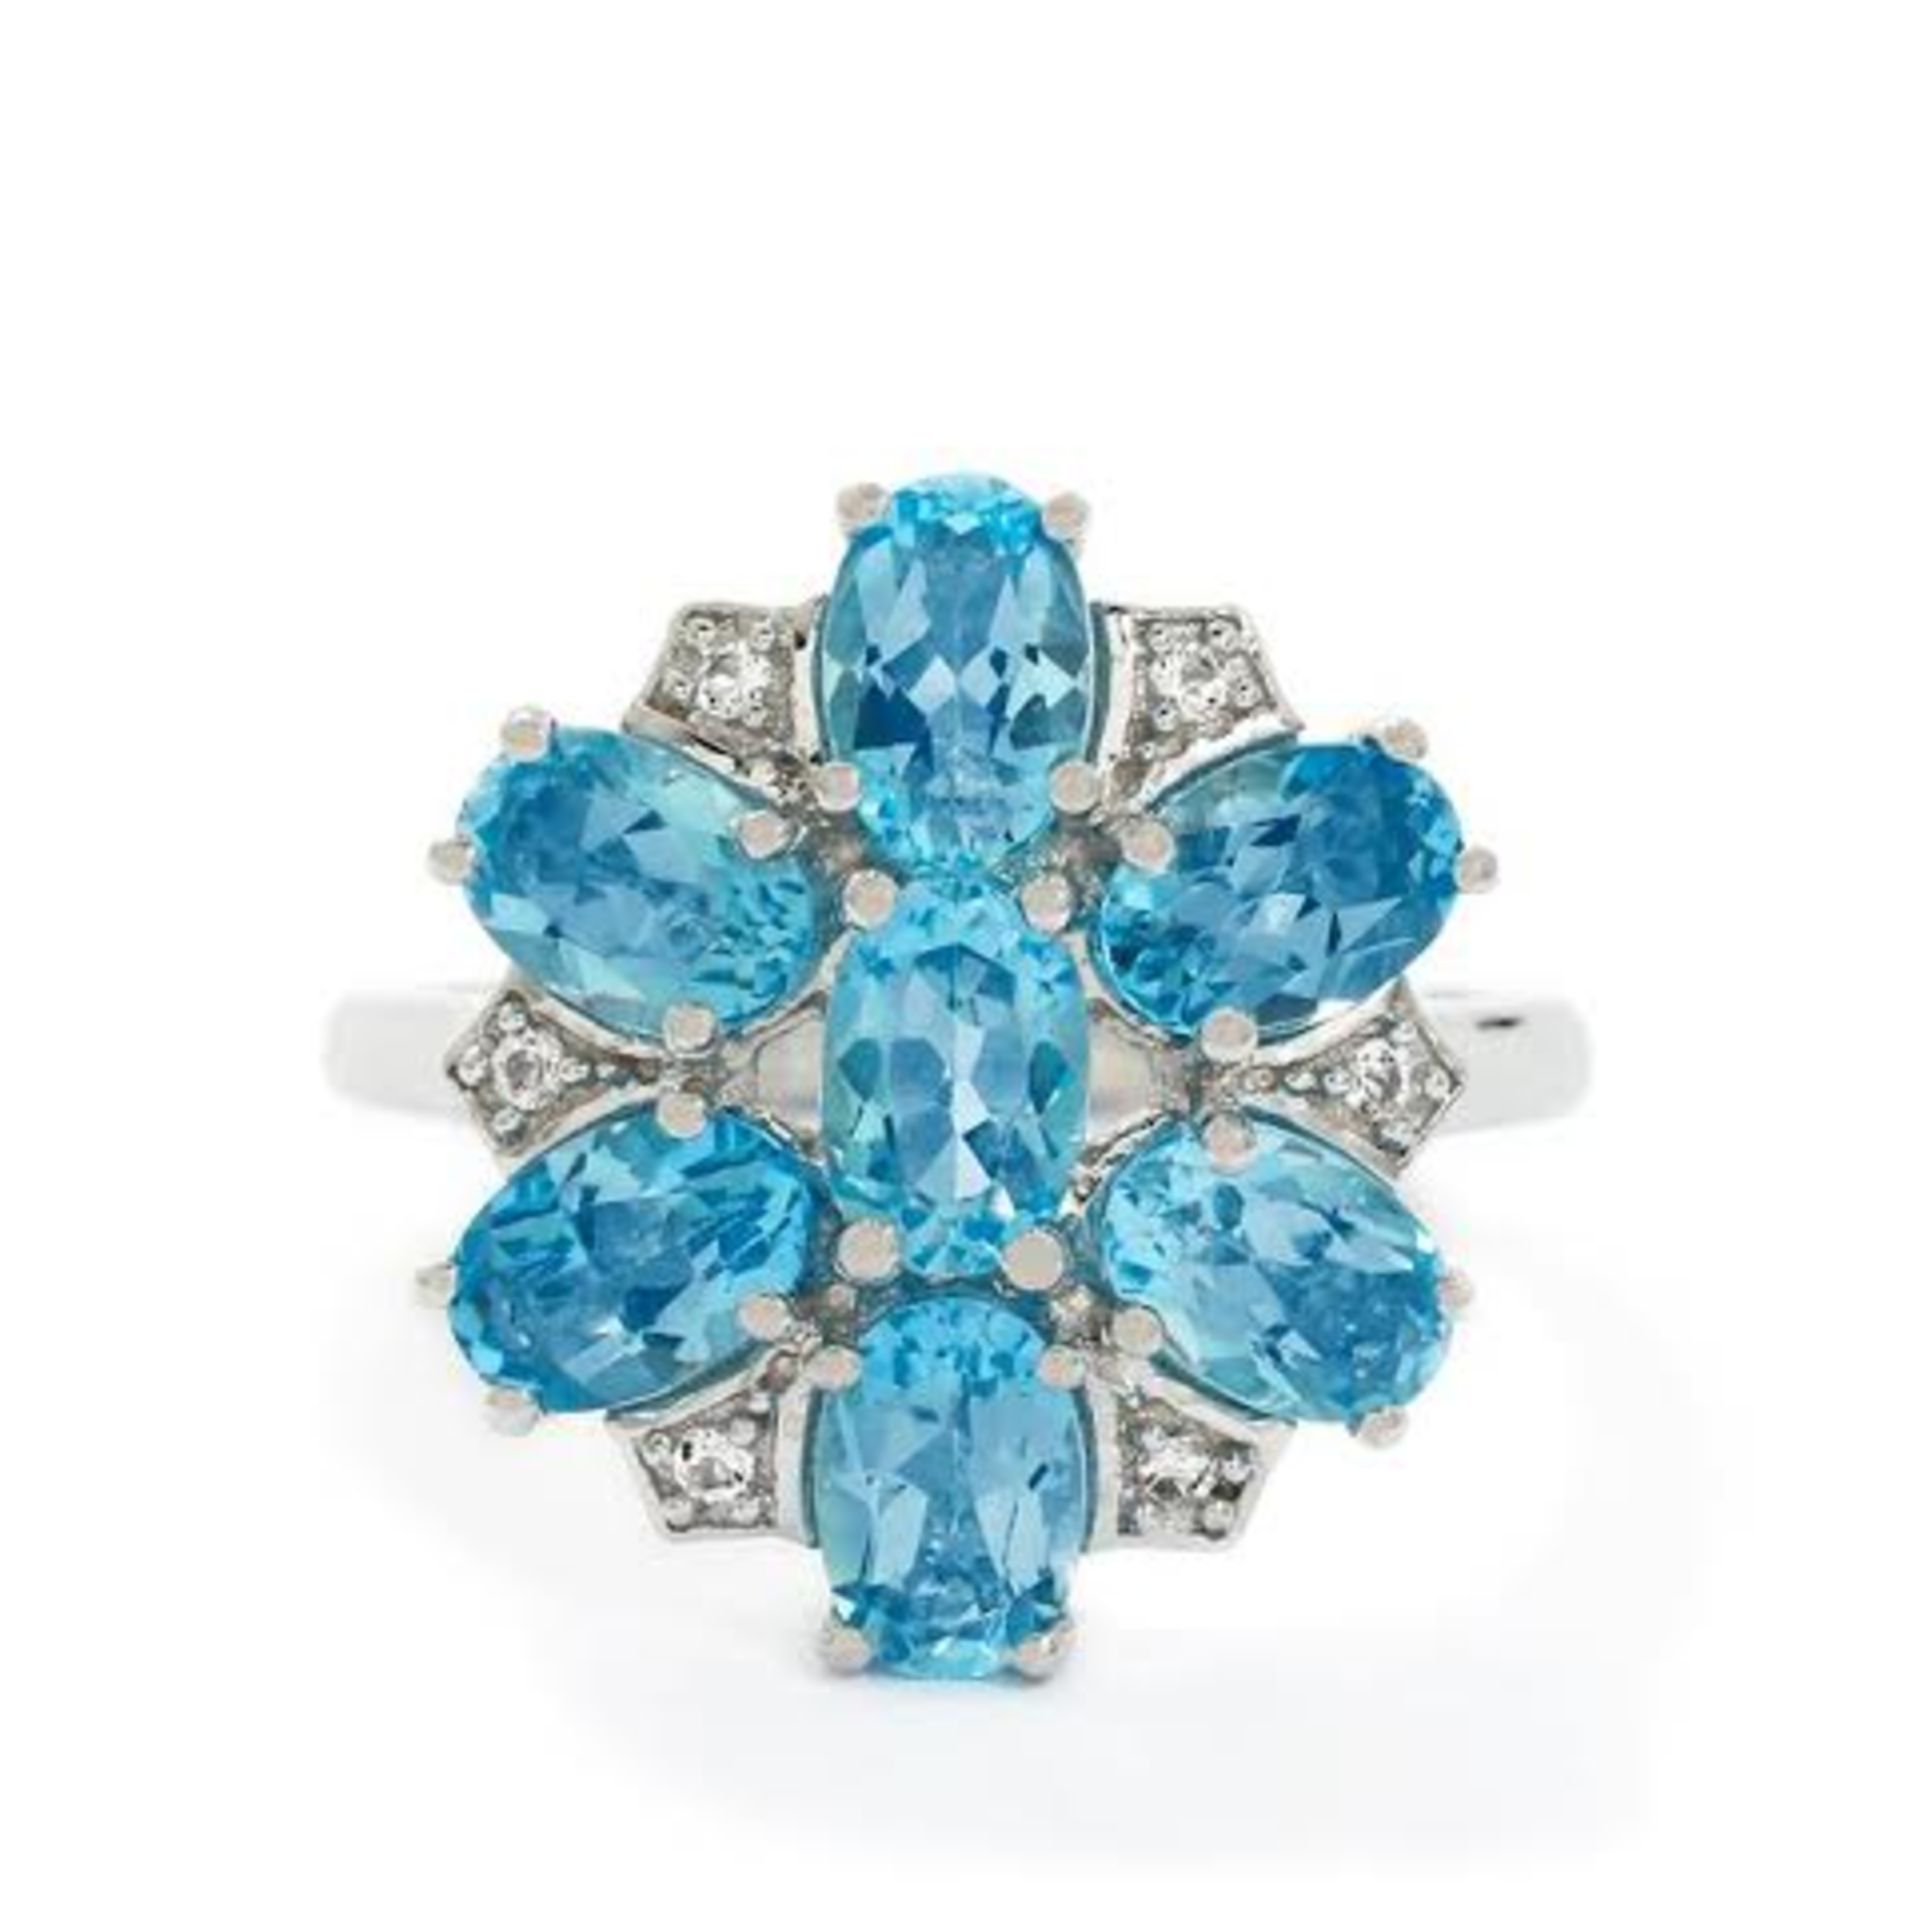 A Stunning Beautifully Cut 7 x Swiss Blue Topaz & White Brazilian Topaz silver ring,